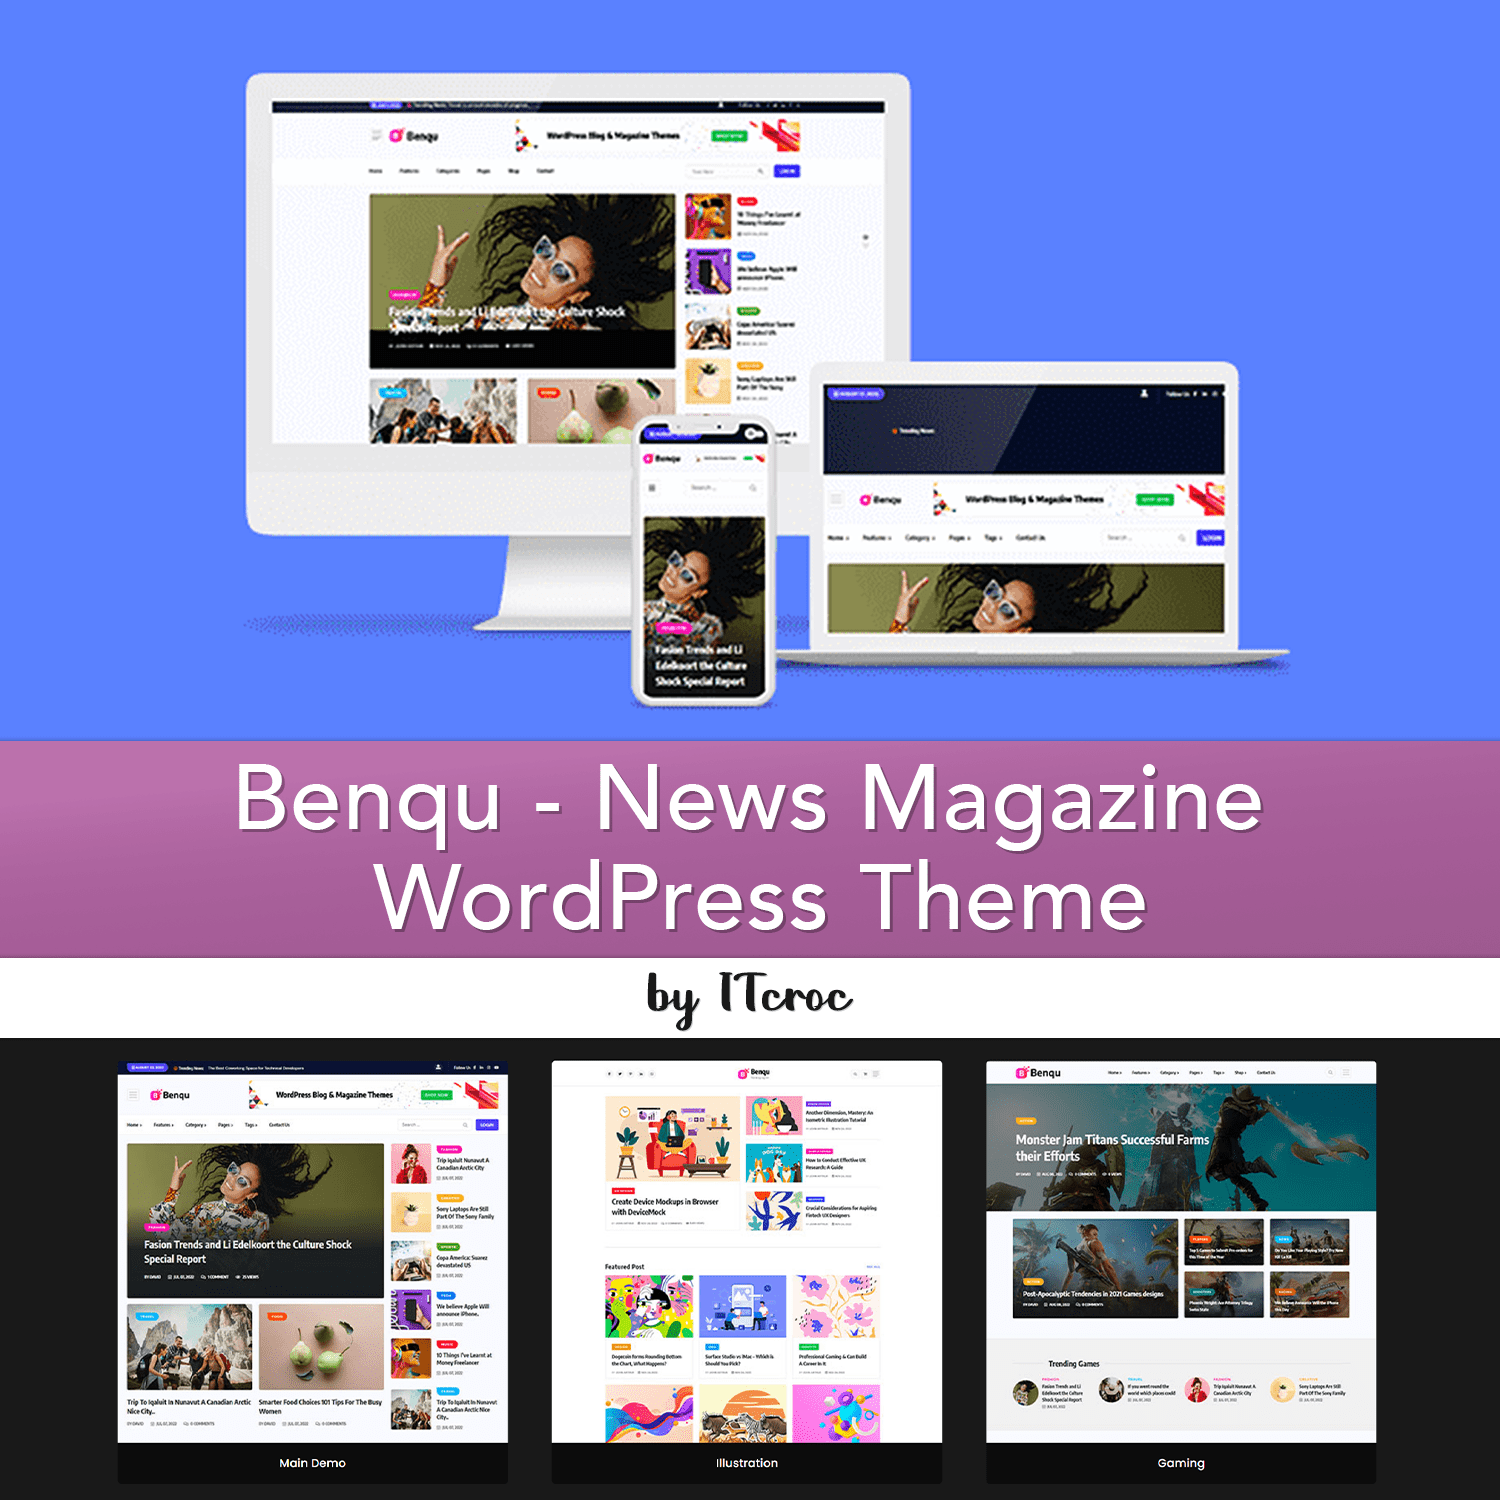 Benqu - News Magazine WordPress Theme cover.